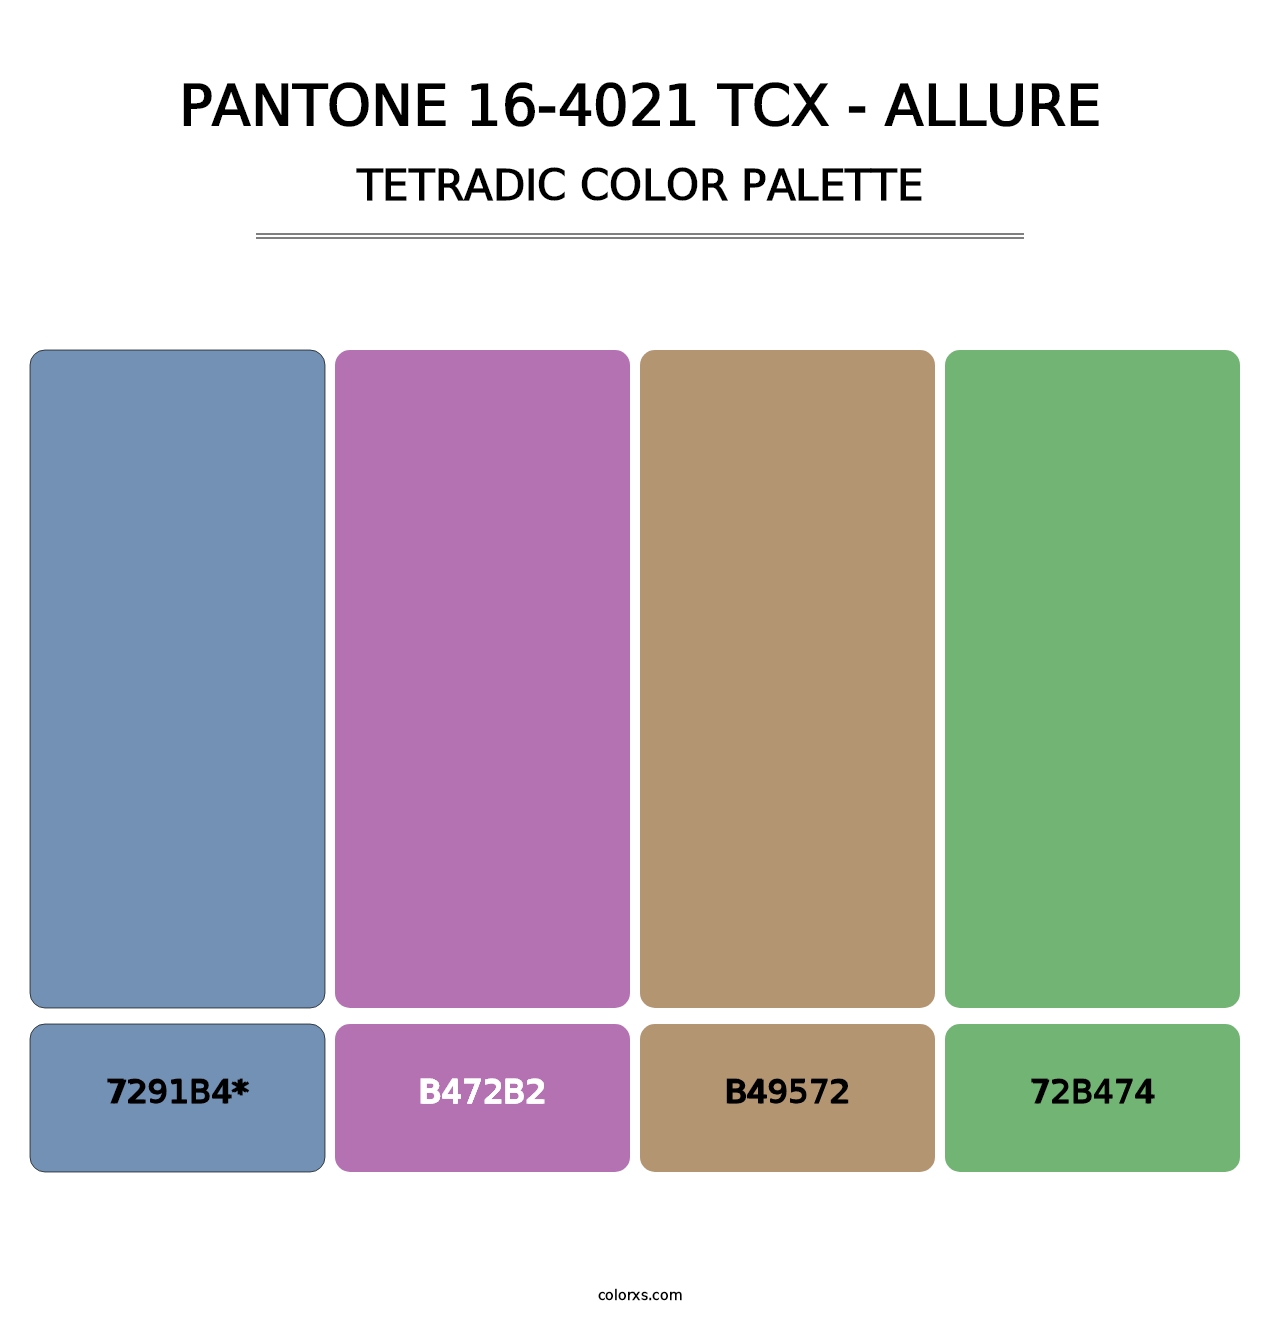 PANTONE 16-4021 TCX - Allure - Tetradic Color Palette